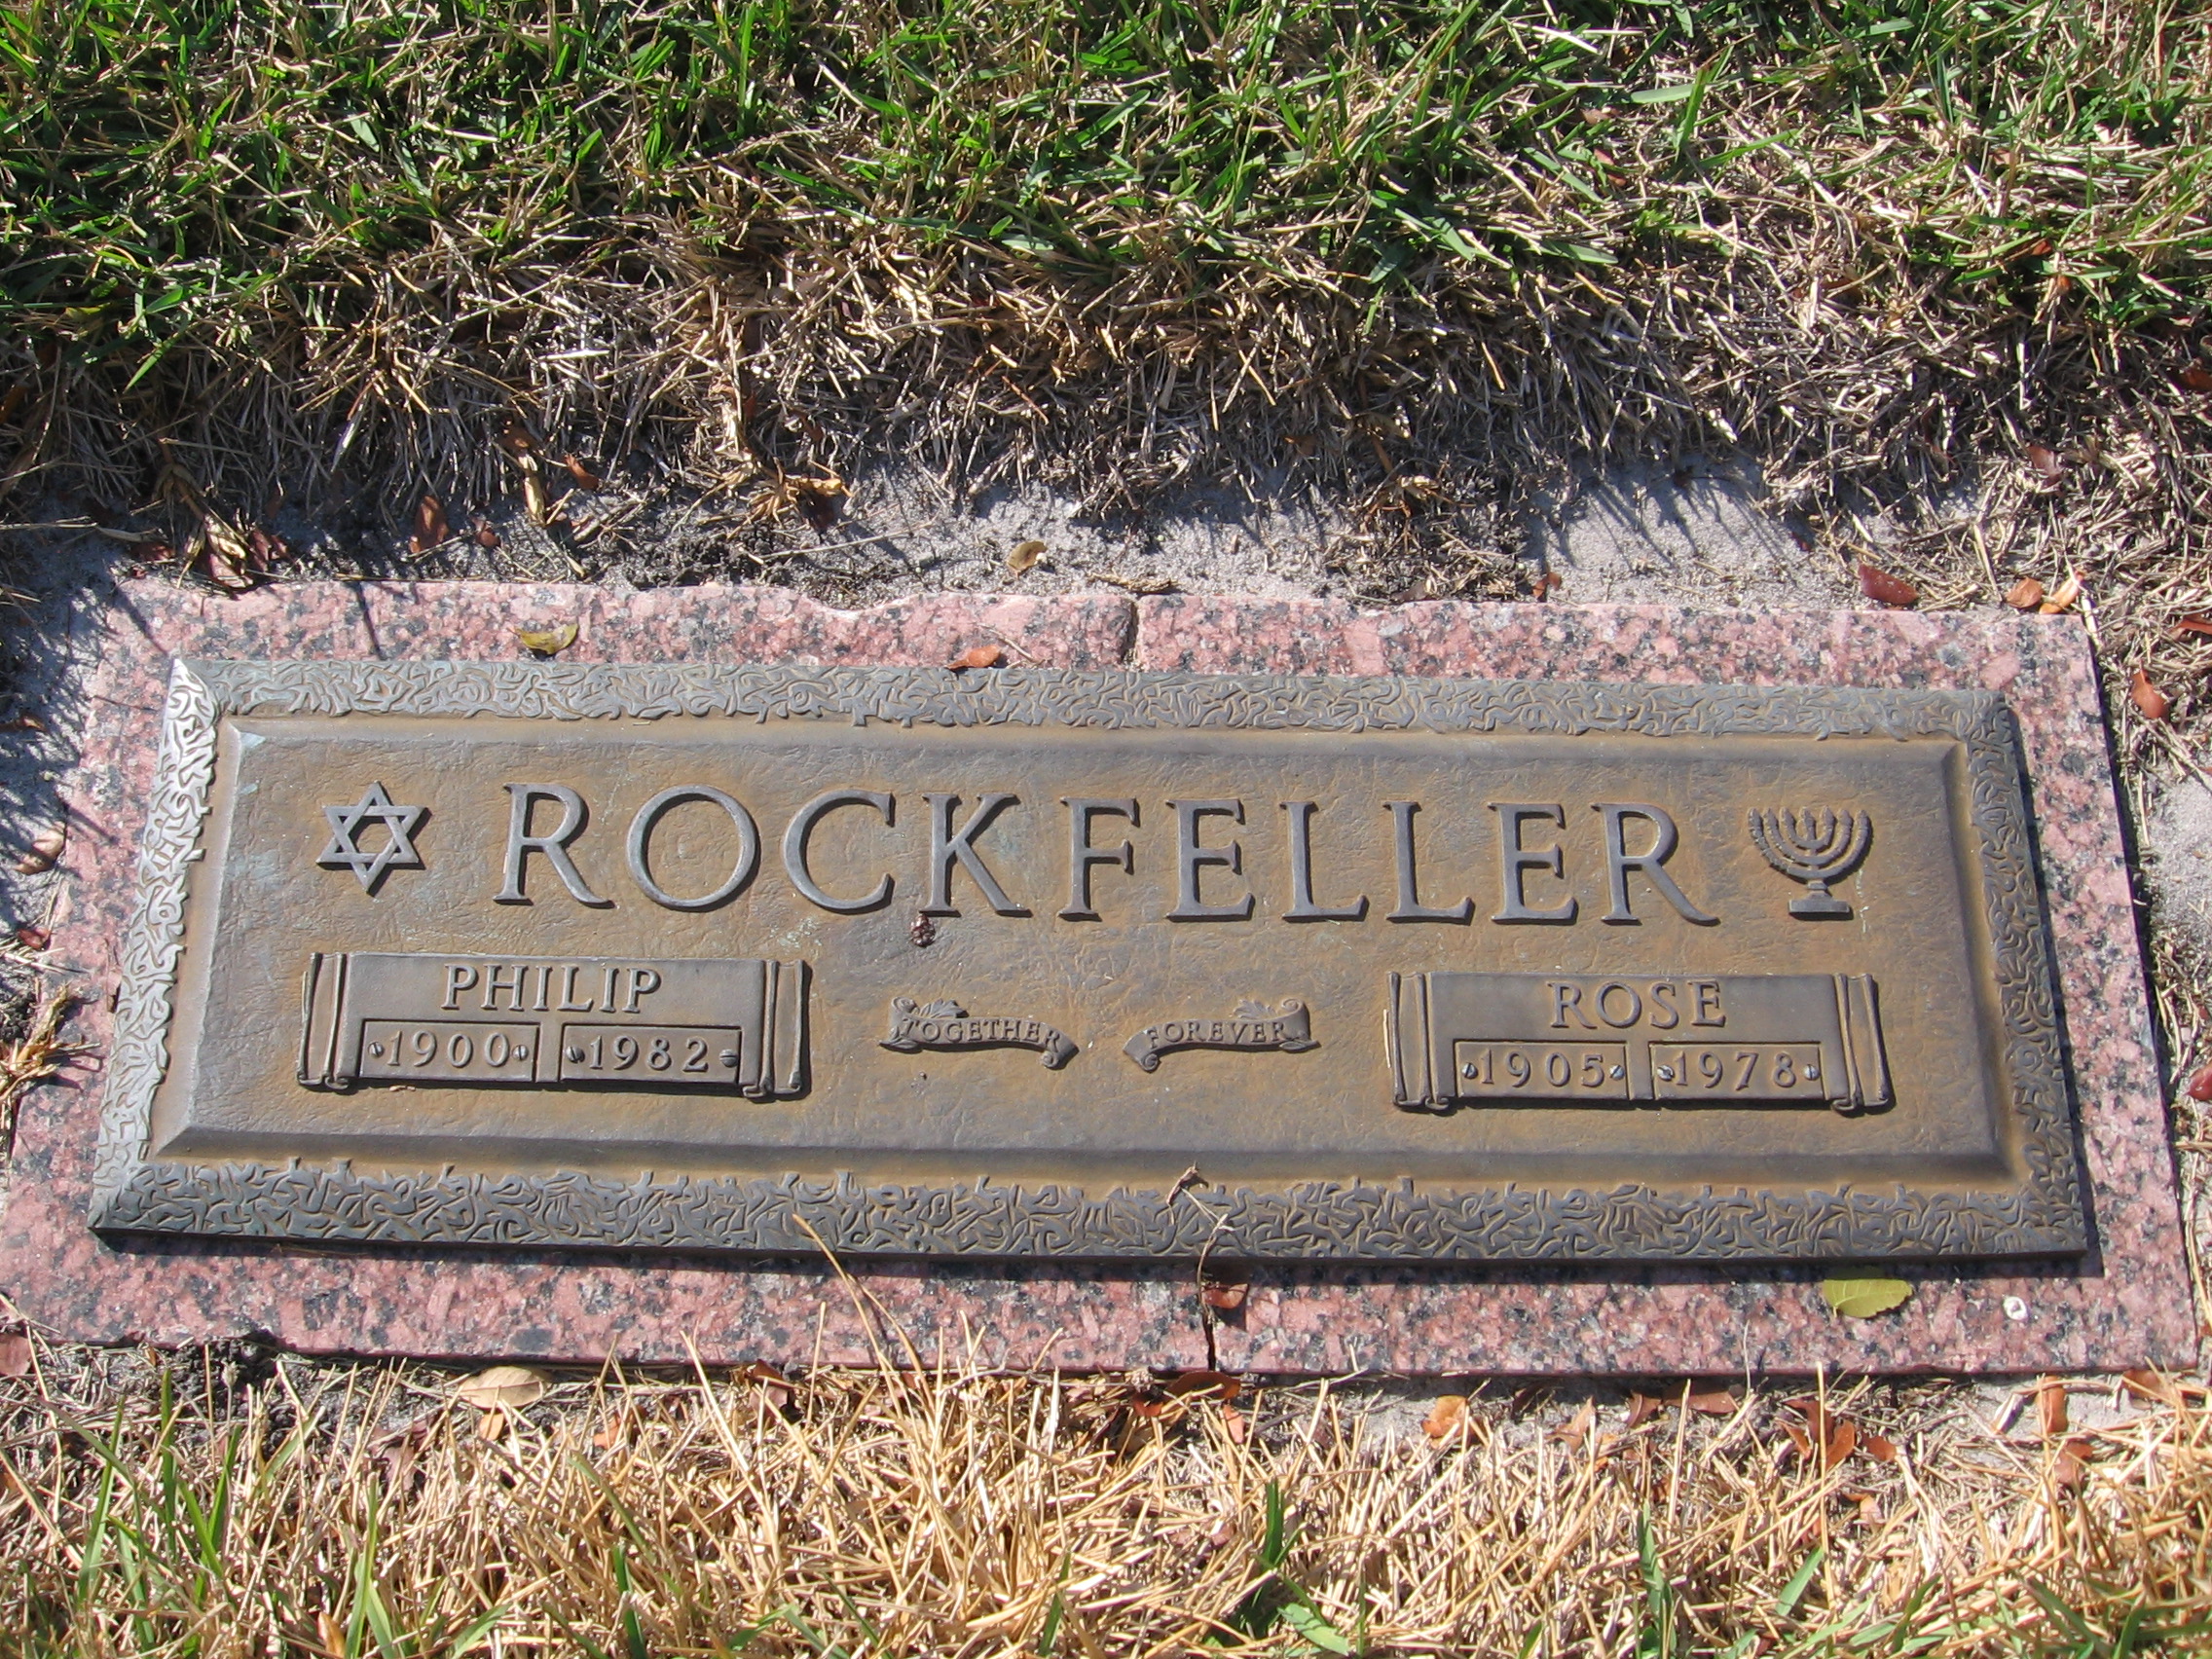 Philip Rockfeller